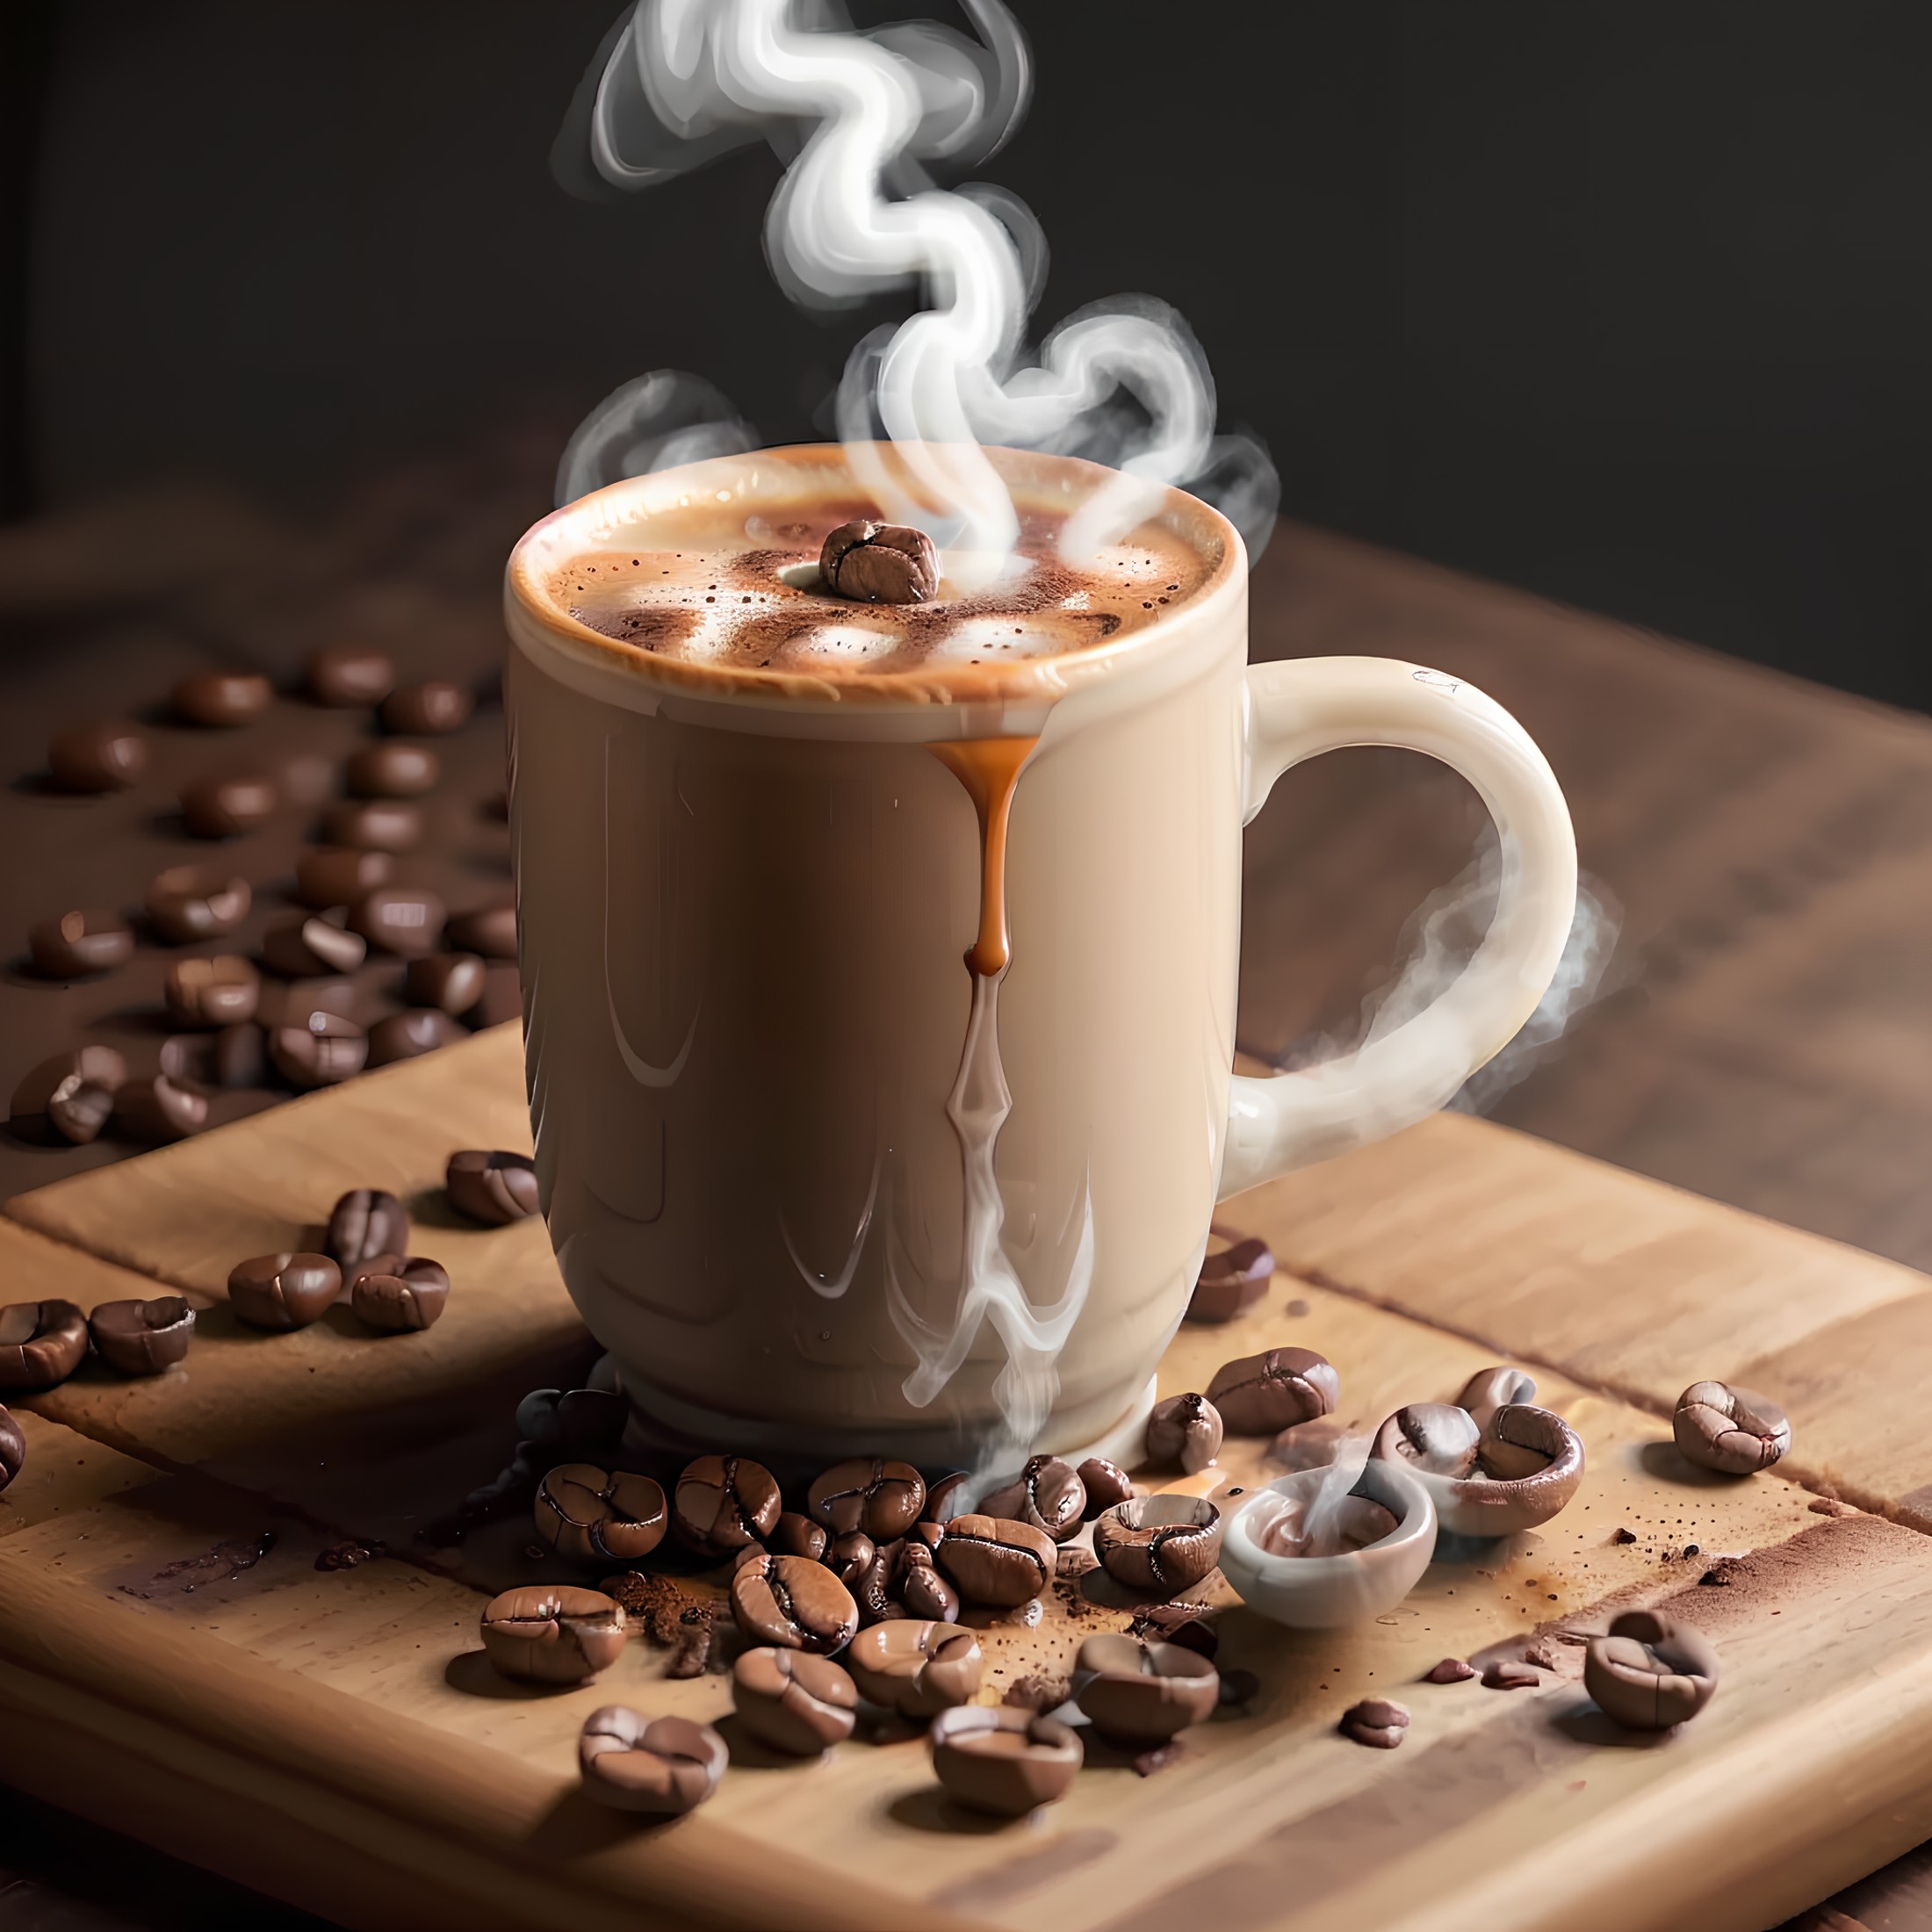 RAW photo, steaming hot coffee in a coffee mug, <lora:foodphoto:1> foodphoto, 8k uhd, dslr, soft lighting, high quality, f...